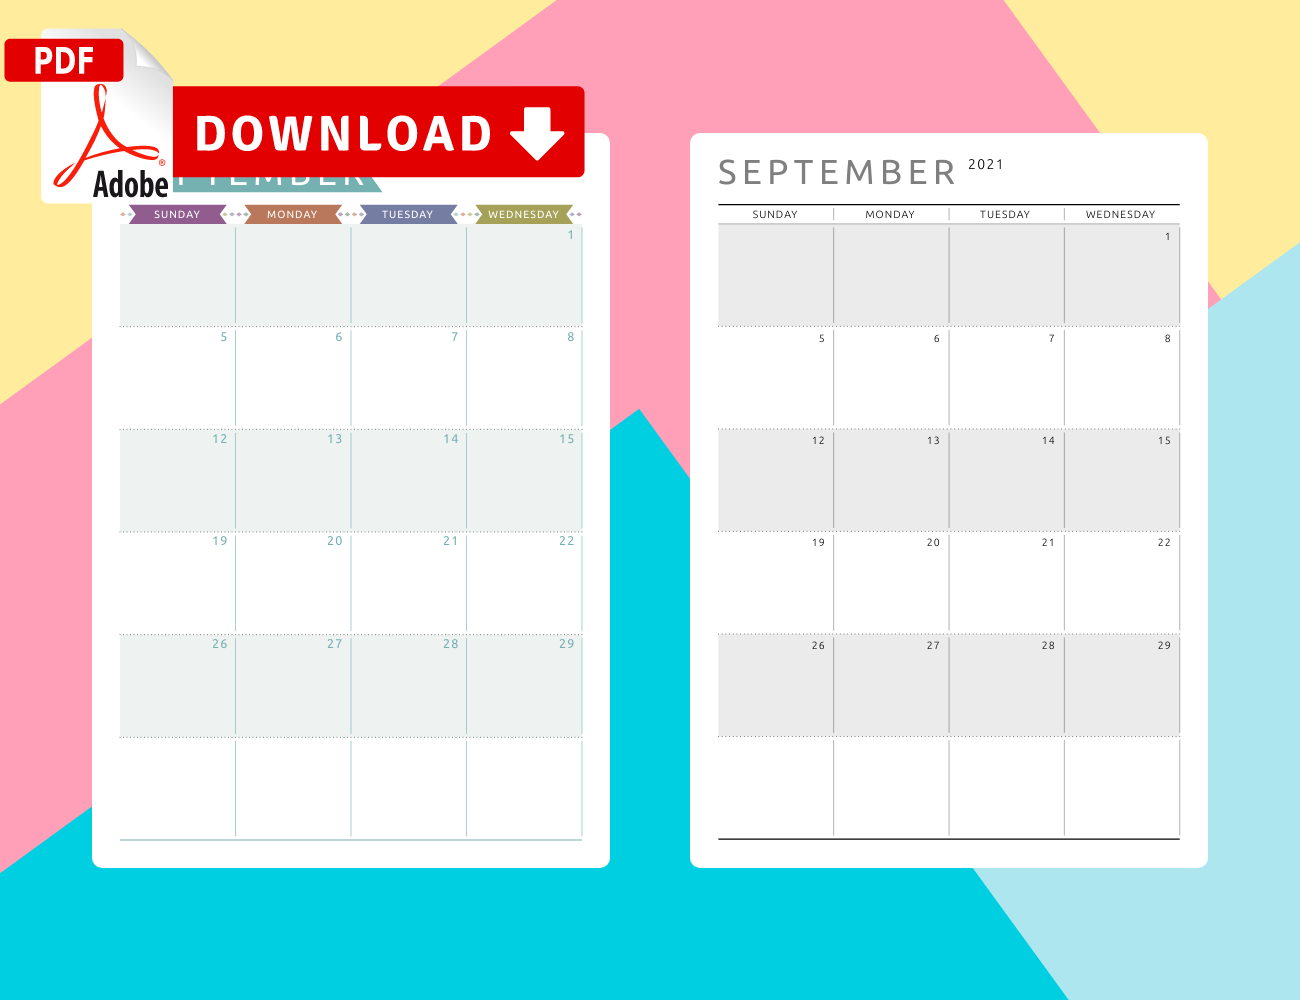 September 2022 PDF calendars